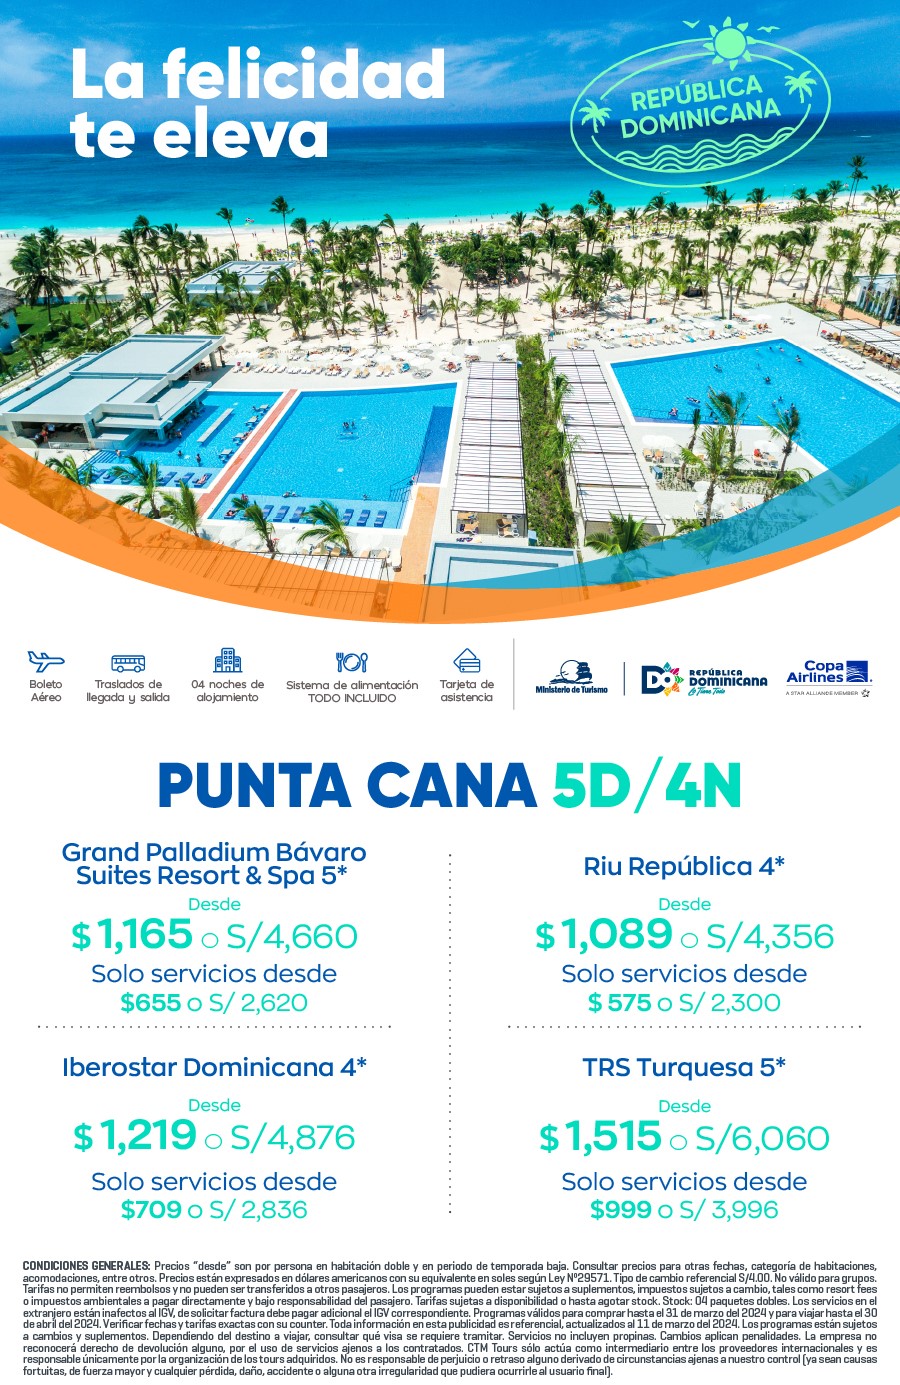 Oferta Punta Cana con todo incluido